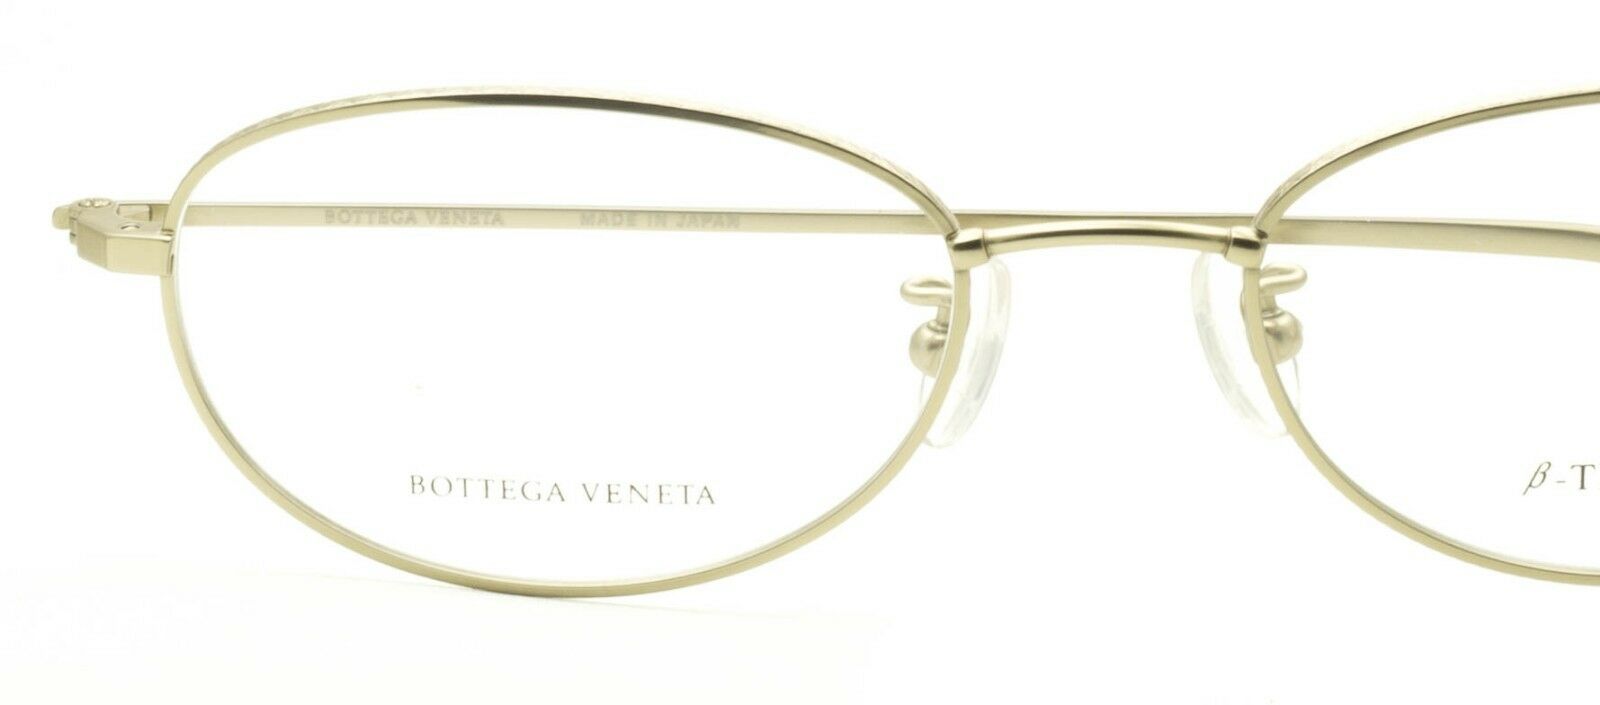 BOTTEGA VENETA B.V. 6502J AOZ 50mm FRAMES Glasses RX Optical Eyewear New Japan